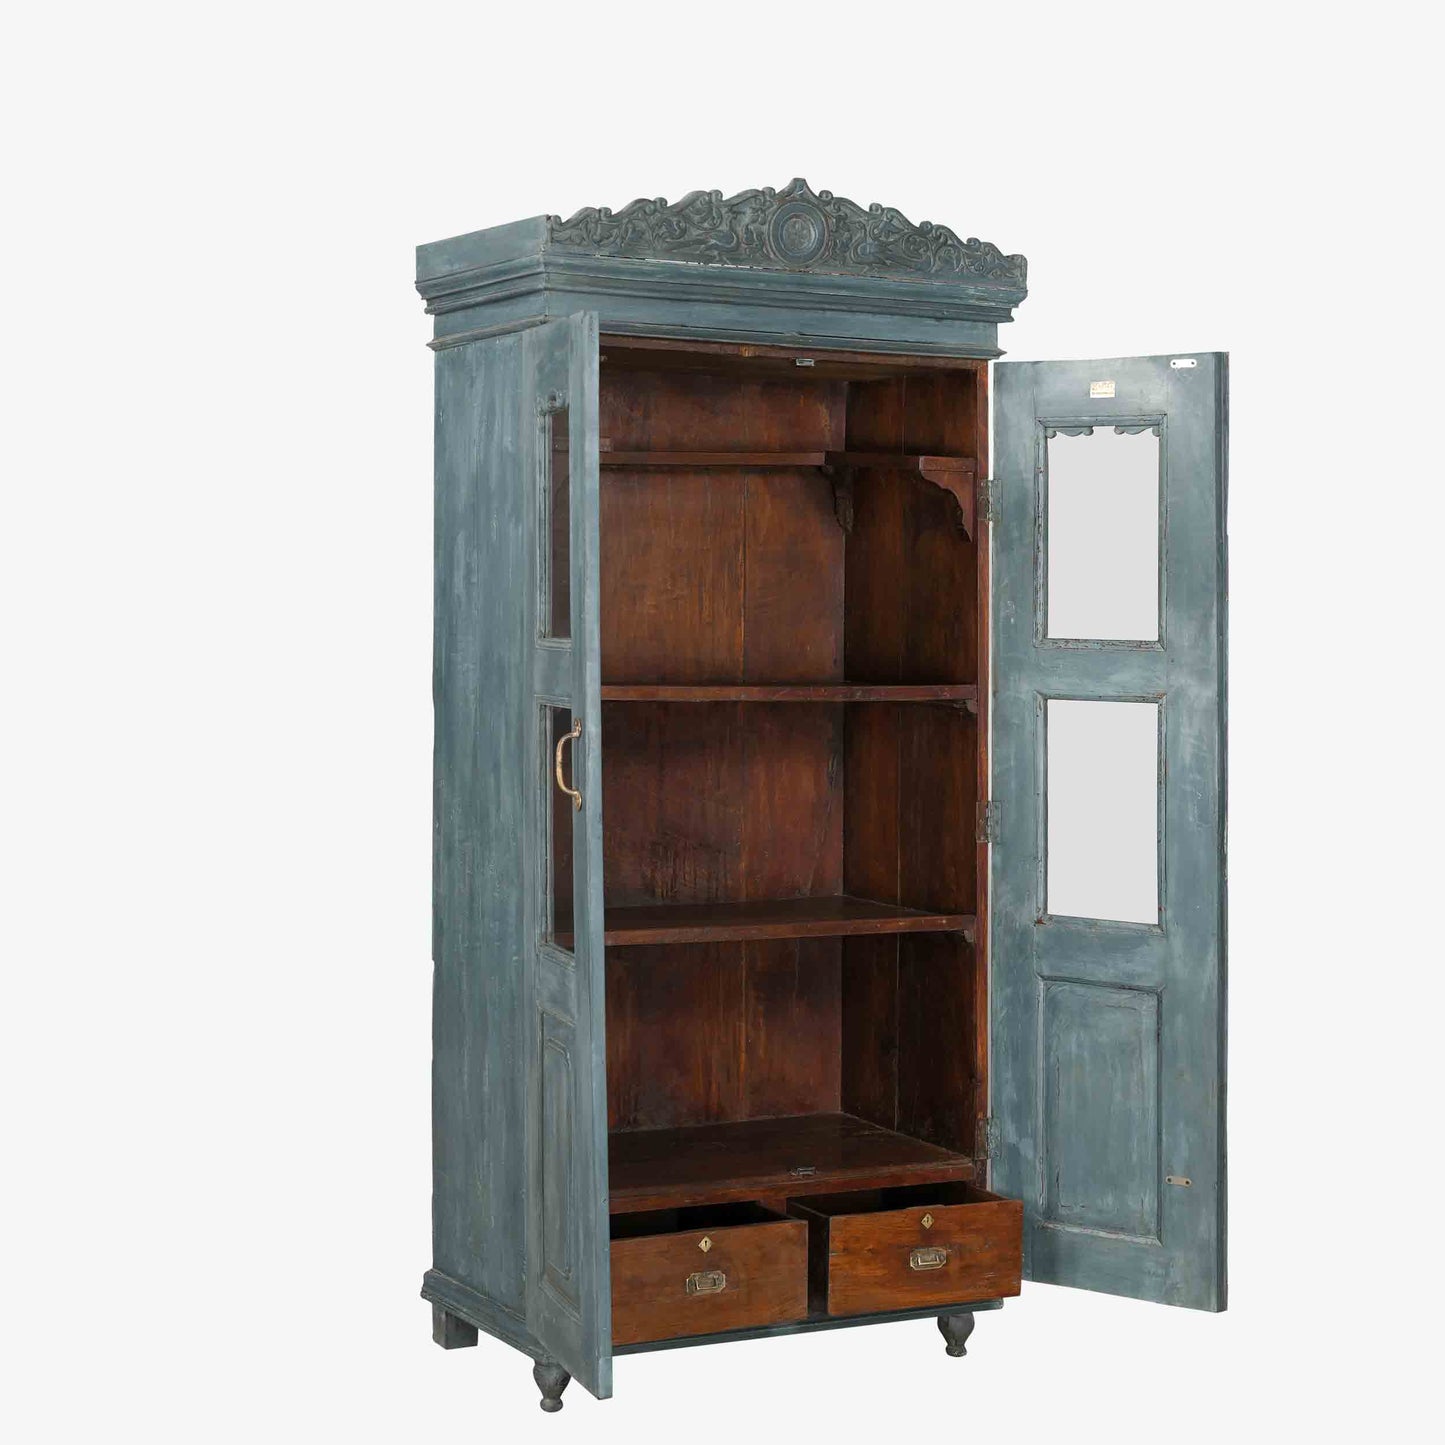 The Belmont Antique Display Dresser in Baltimore Blue